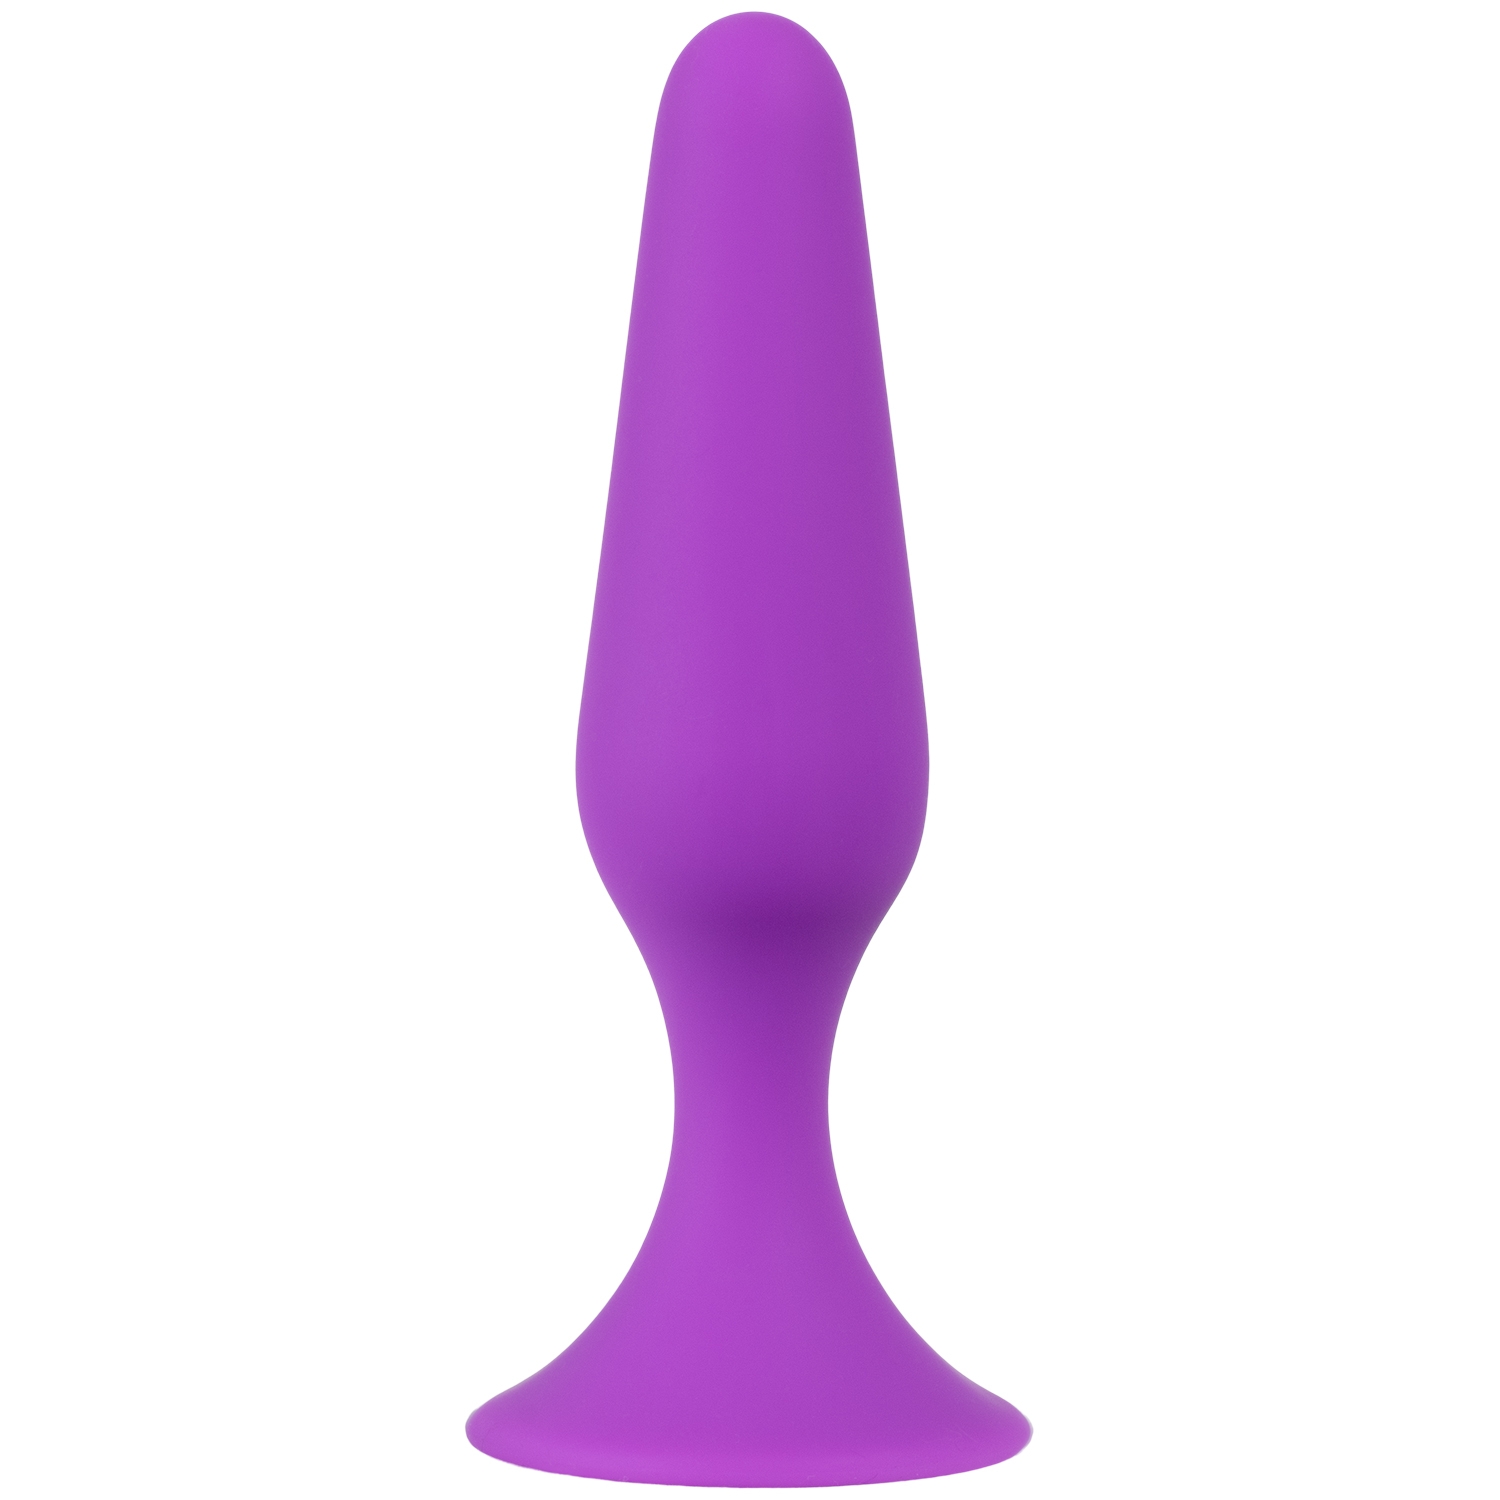 baseks Slim Butt Plug Small - Purple